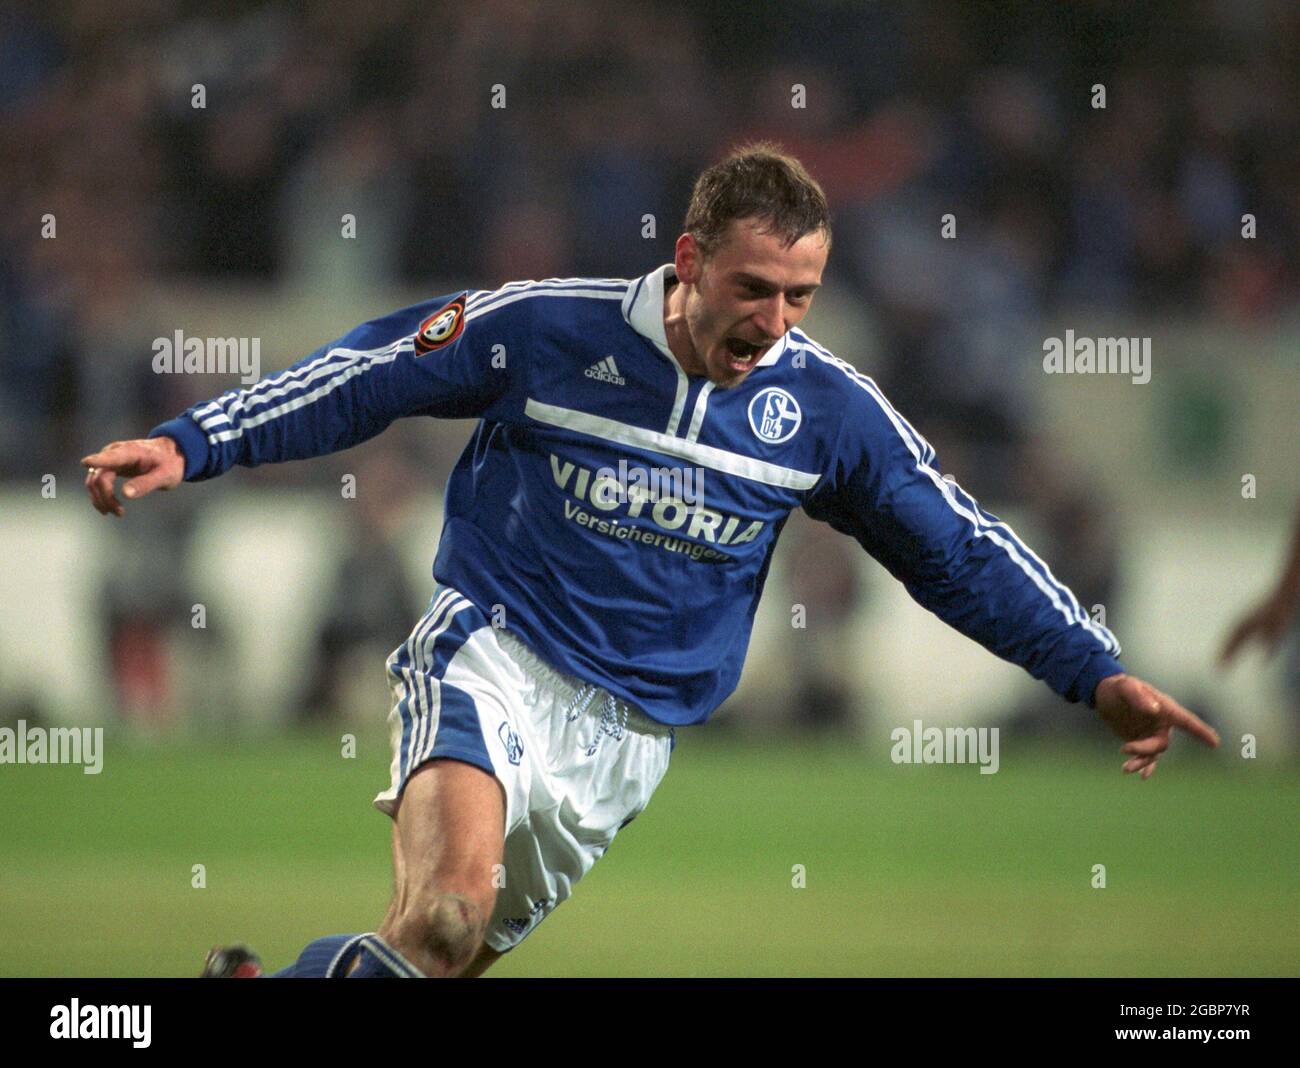 Gelsenkirchen Germany 26.1.2002, Football: Bundesliga Season 2001/02, FC  Schalke 04 (S04, blue) vs FC Bayern Munich (FCB,red) 5:1 — Joerg BOEHME  (S04 Stock Photo - Alamy